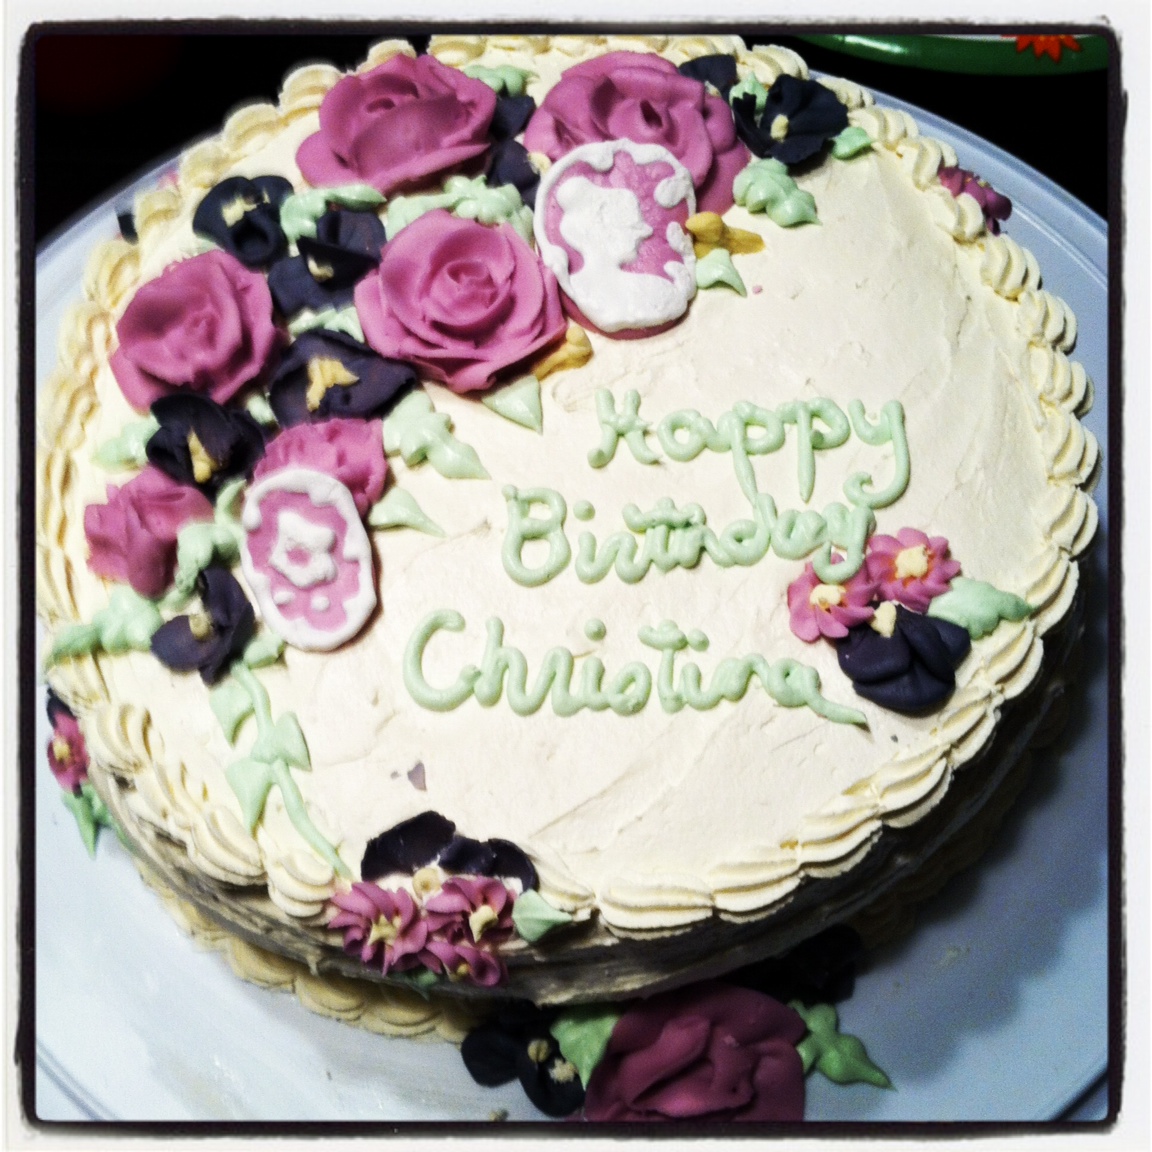 Happy birthday, Christina! Christina-cake-1